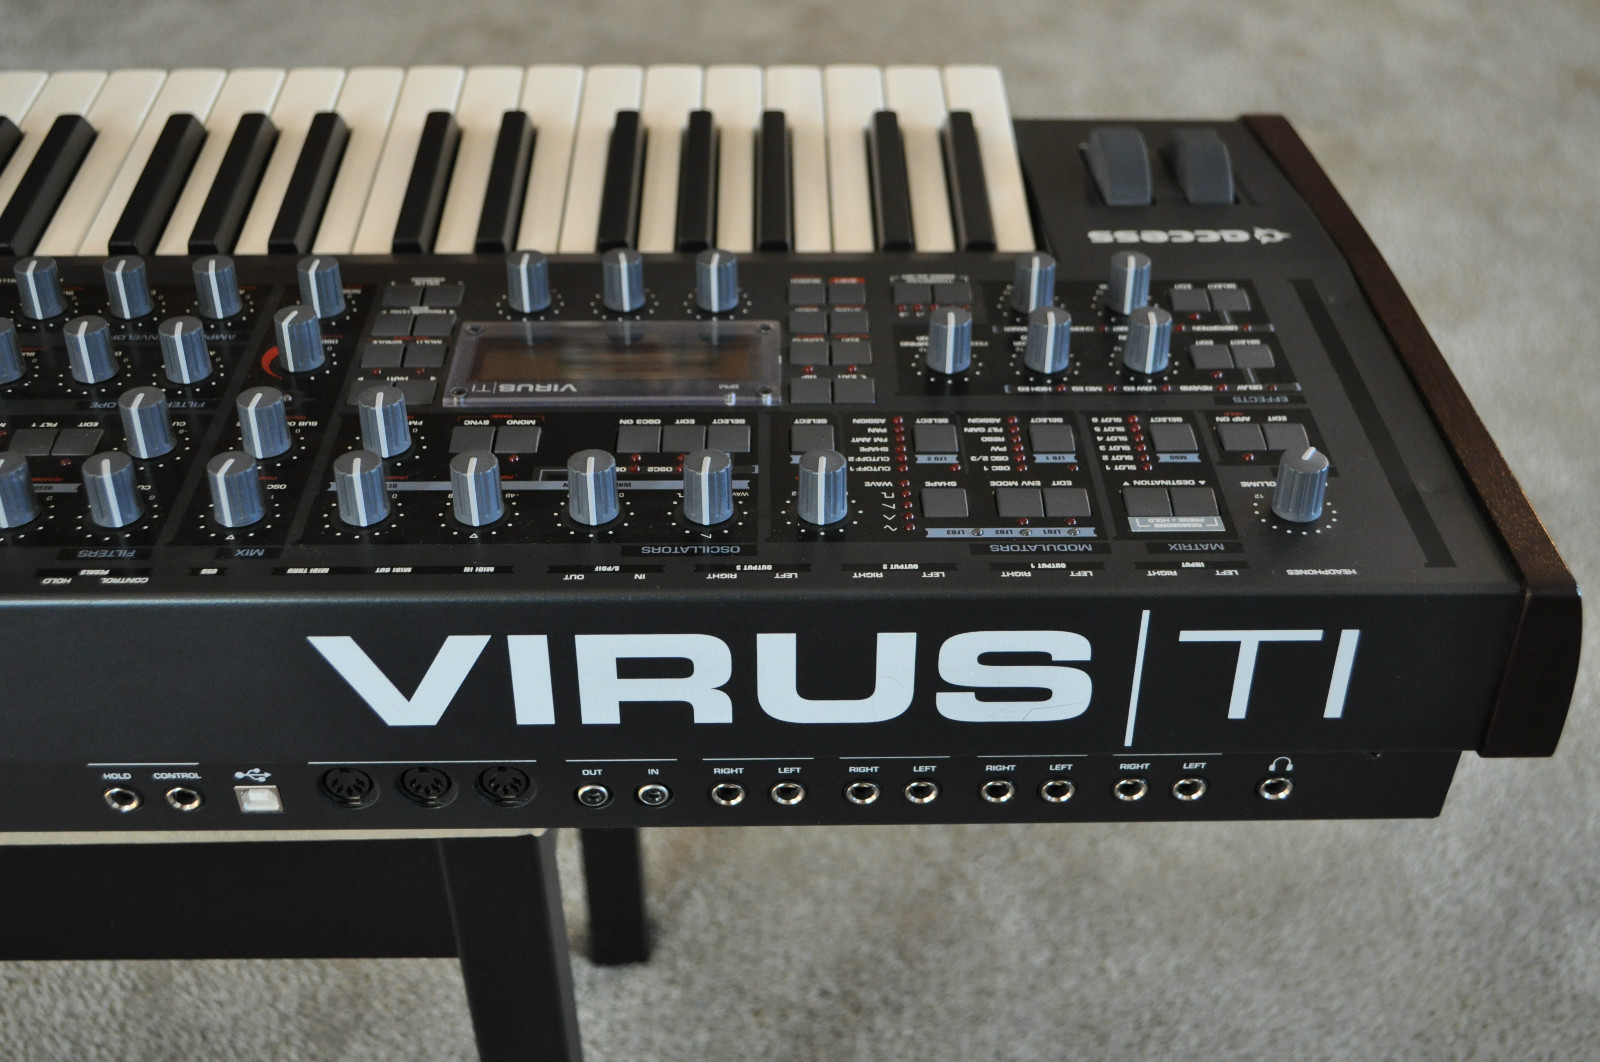 Virus ti. Синтезатор virus ti. Access virus ti1. Access virus ti Keyboard. Access virus ti2 desktop.